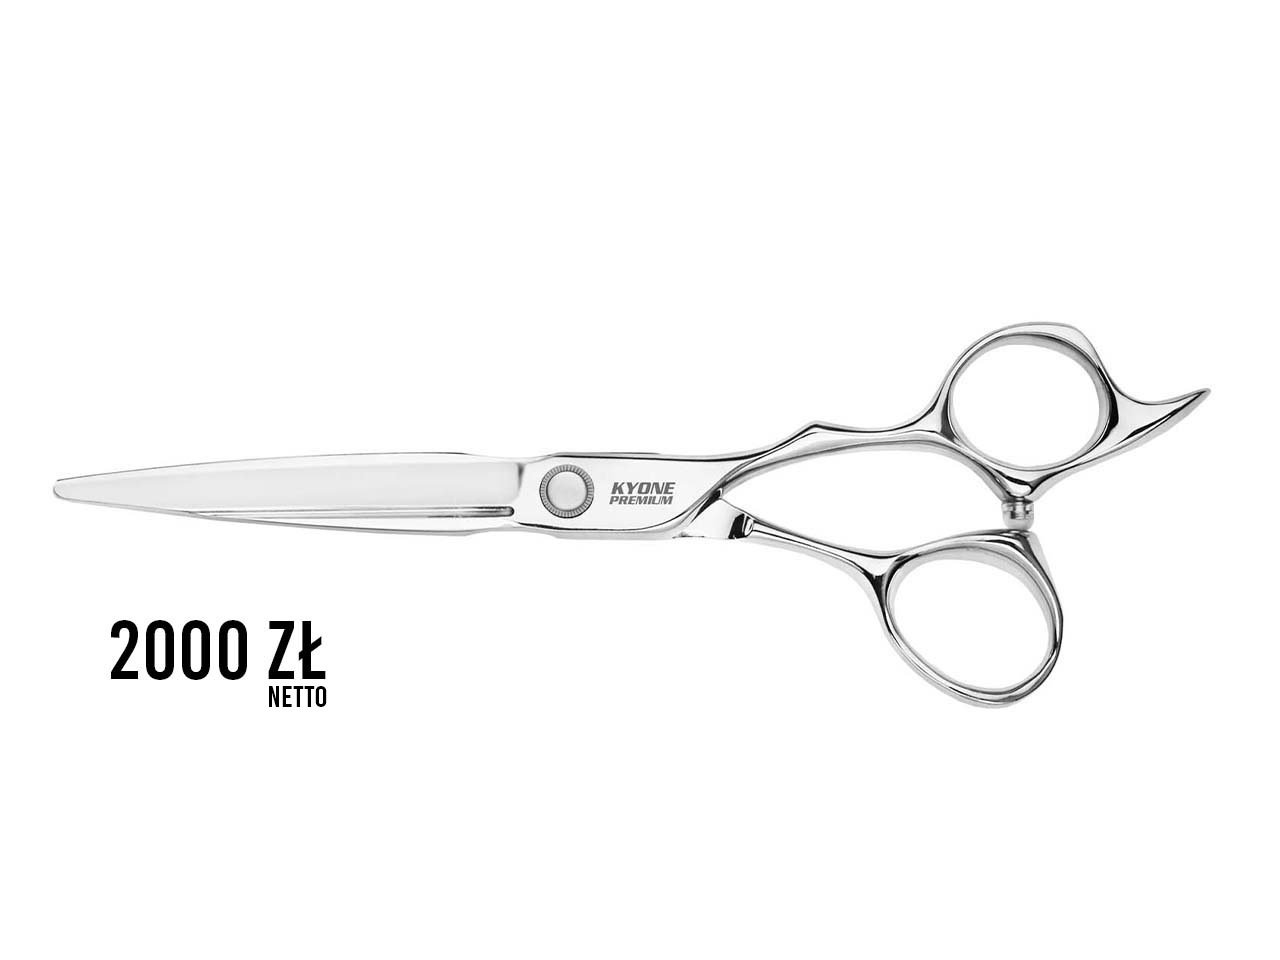 Nożyczki Kyone Premium 2800